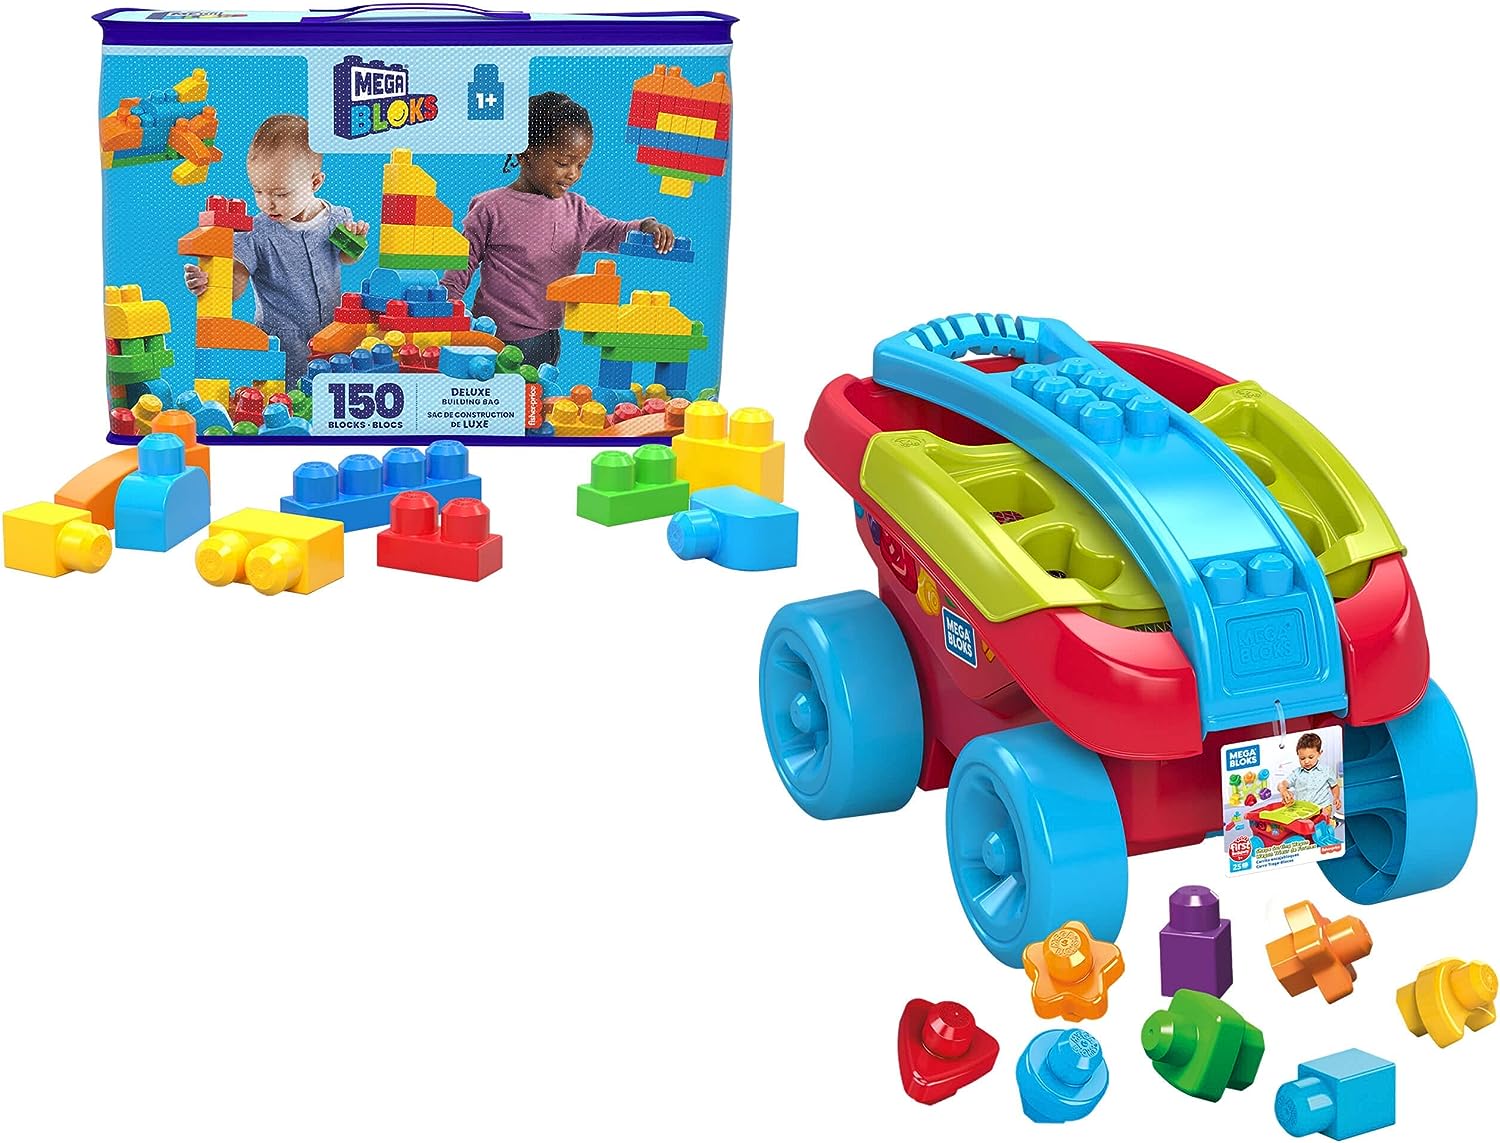  MEGA BLOKS Fisher-Price Toddler Block Toys, Deluxe